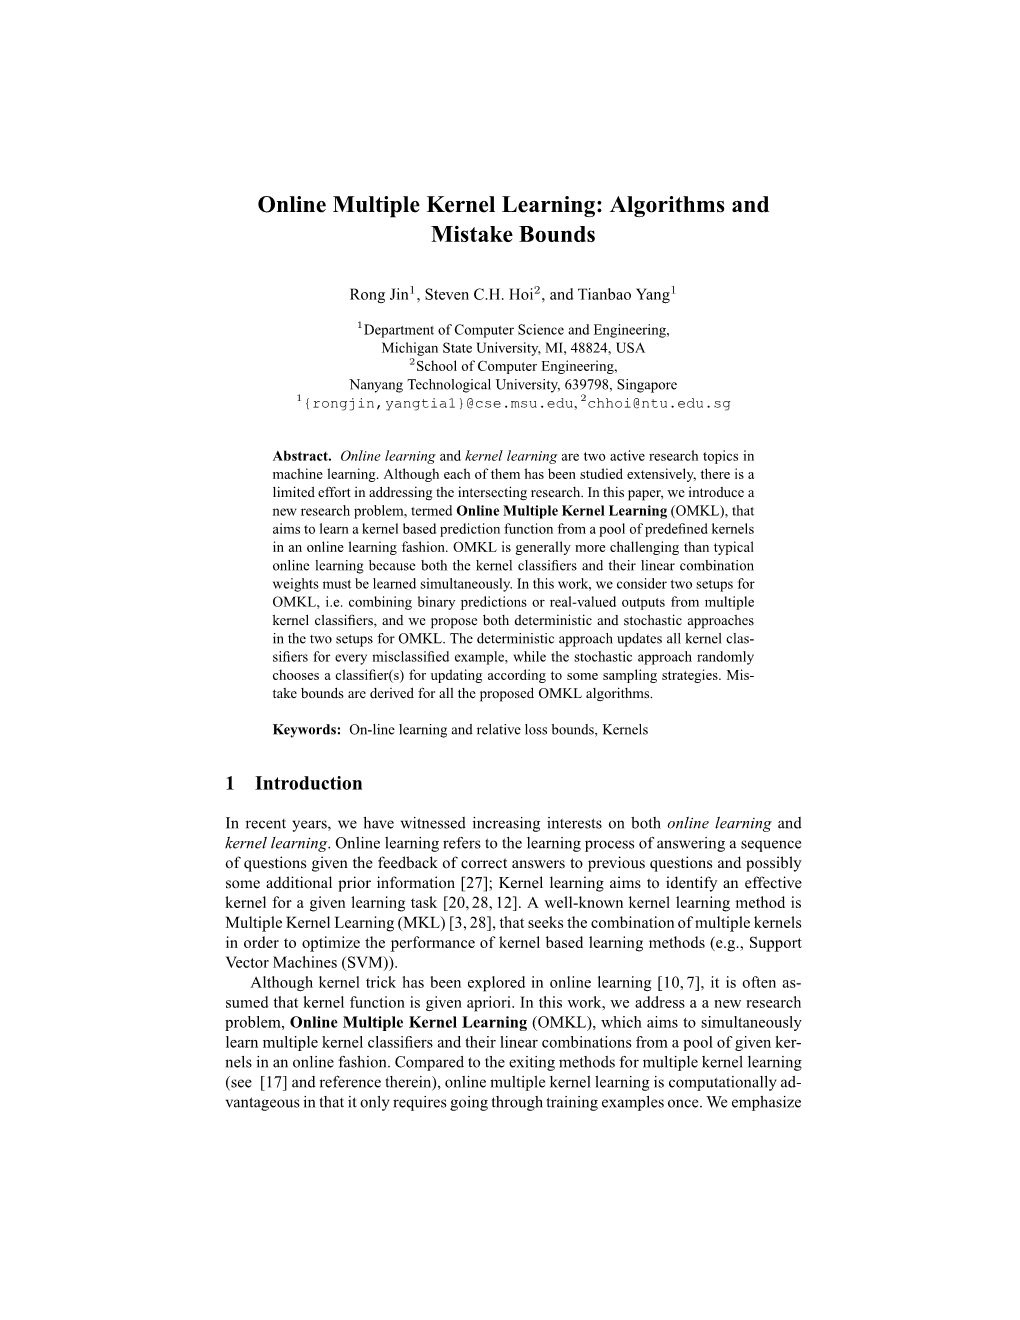 Online Multiple Kernel Learning: Algorithms and Mistake Bounds